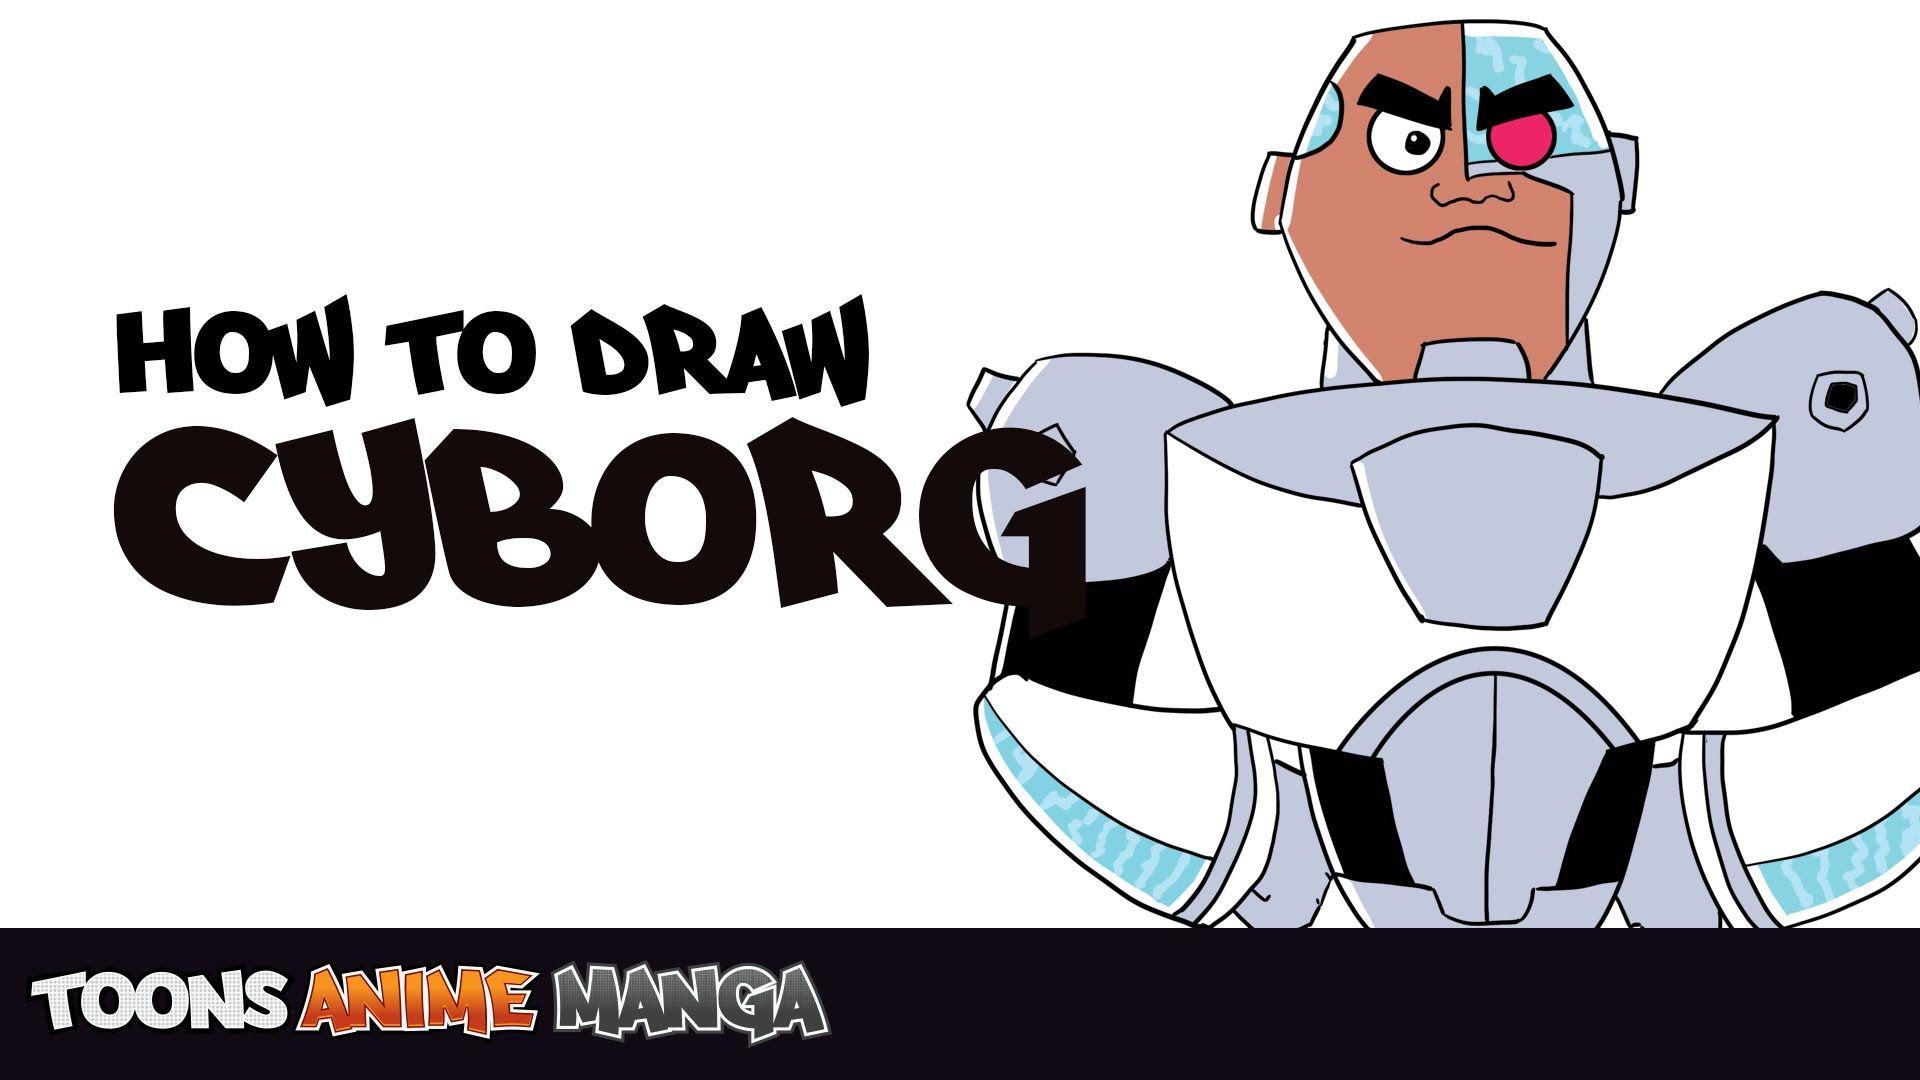 How To Draw Cyborg Titans Go!